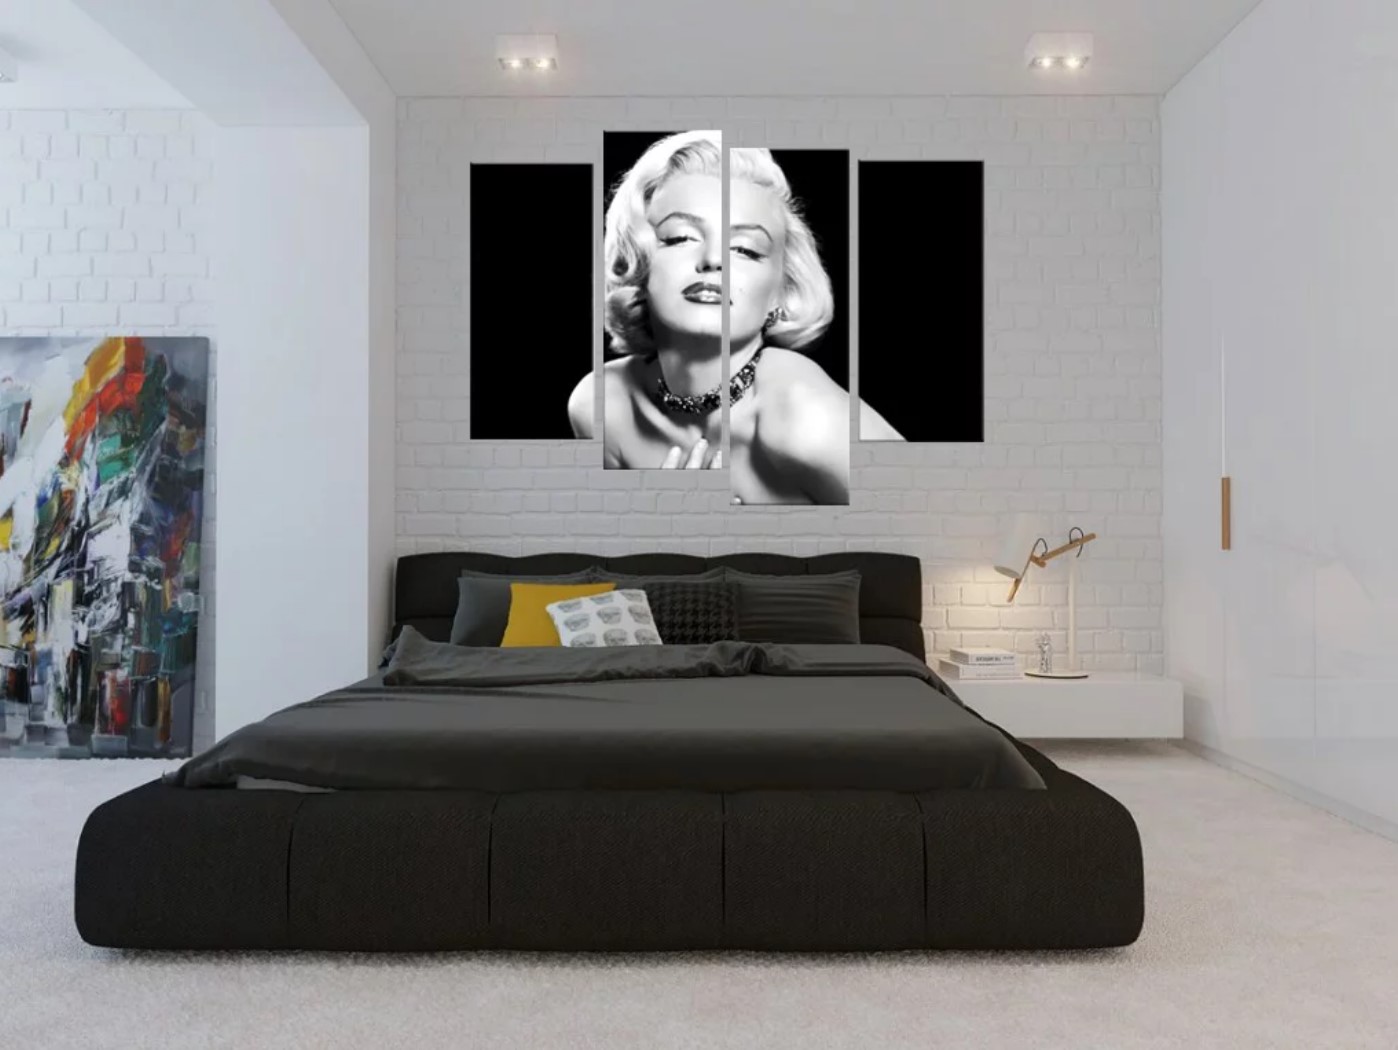 Minimalist room with Marilyn Monroe painting